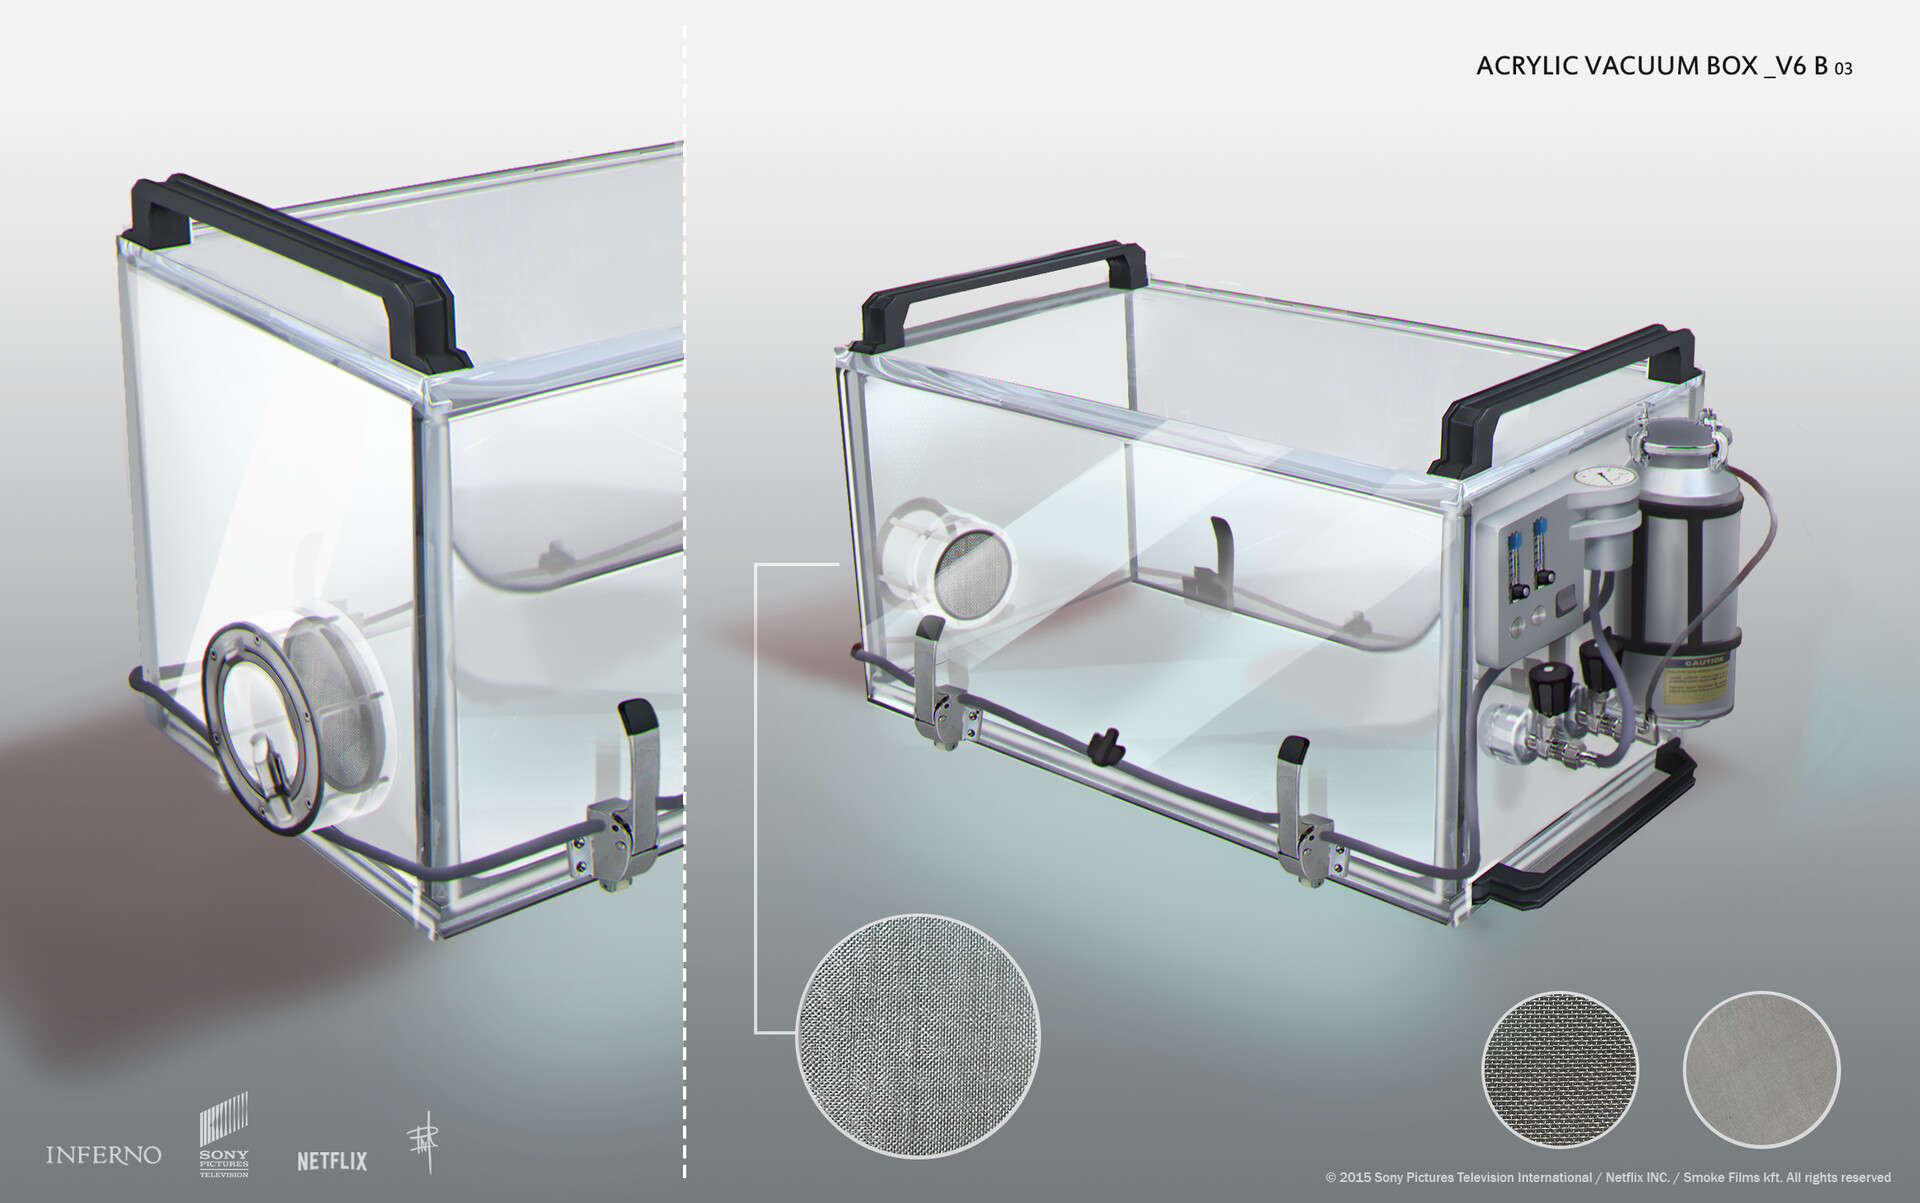 Gergely Piroska - Concept Art for the movie Inferno: Acrylic Vacuum Box